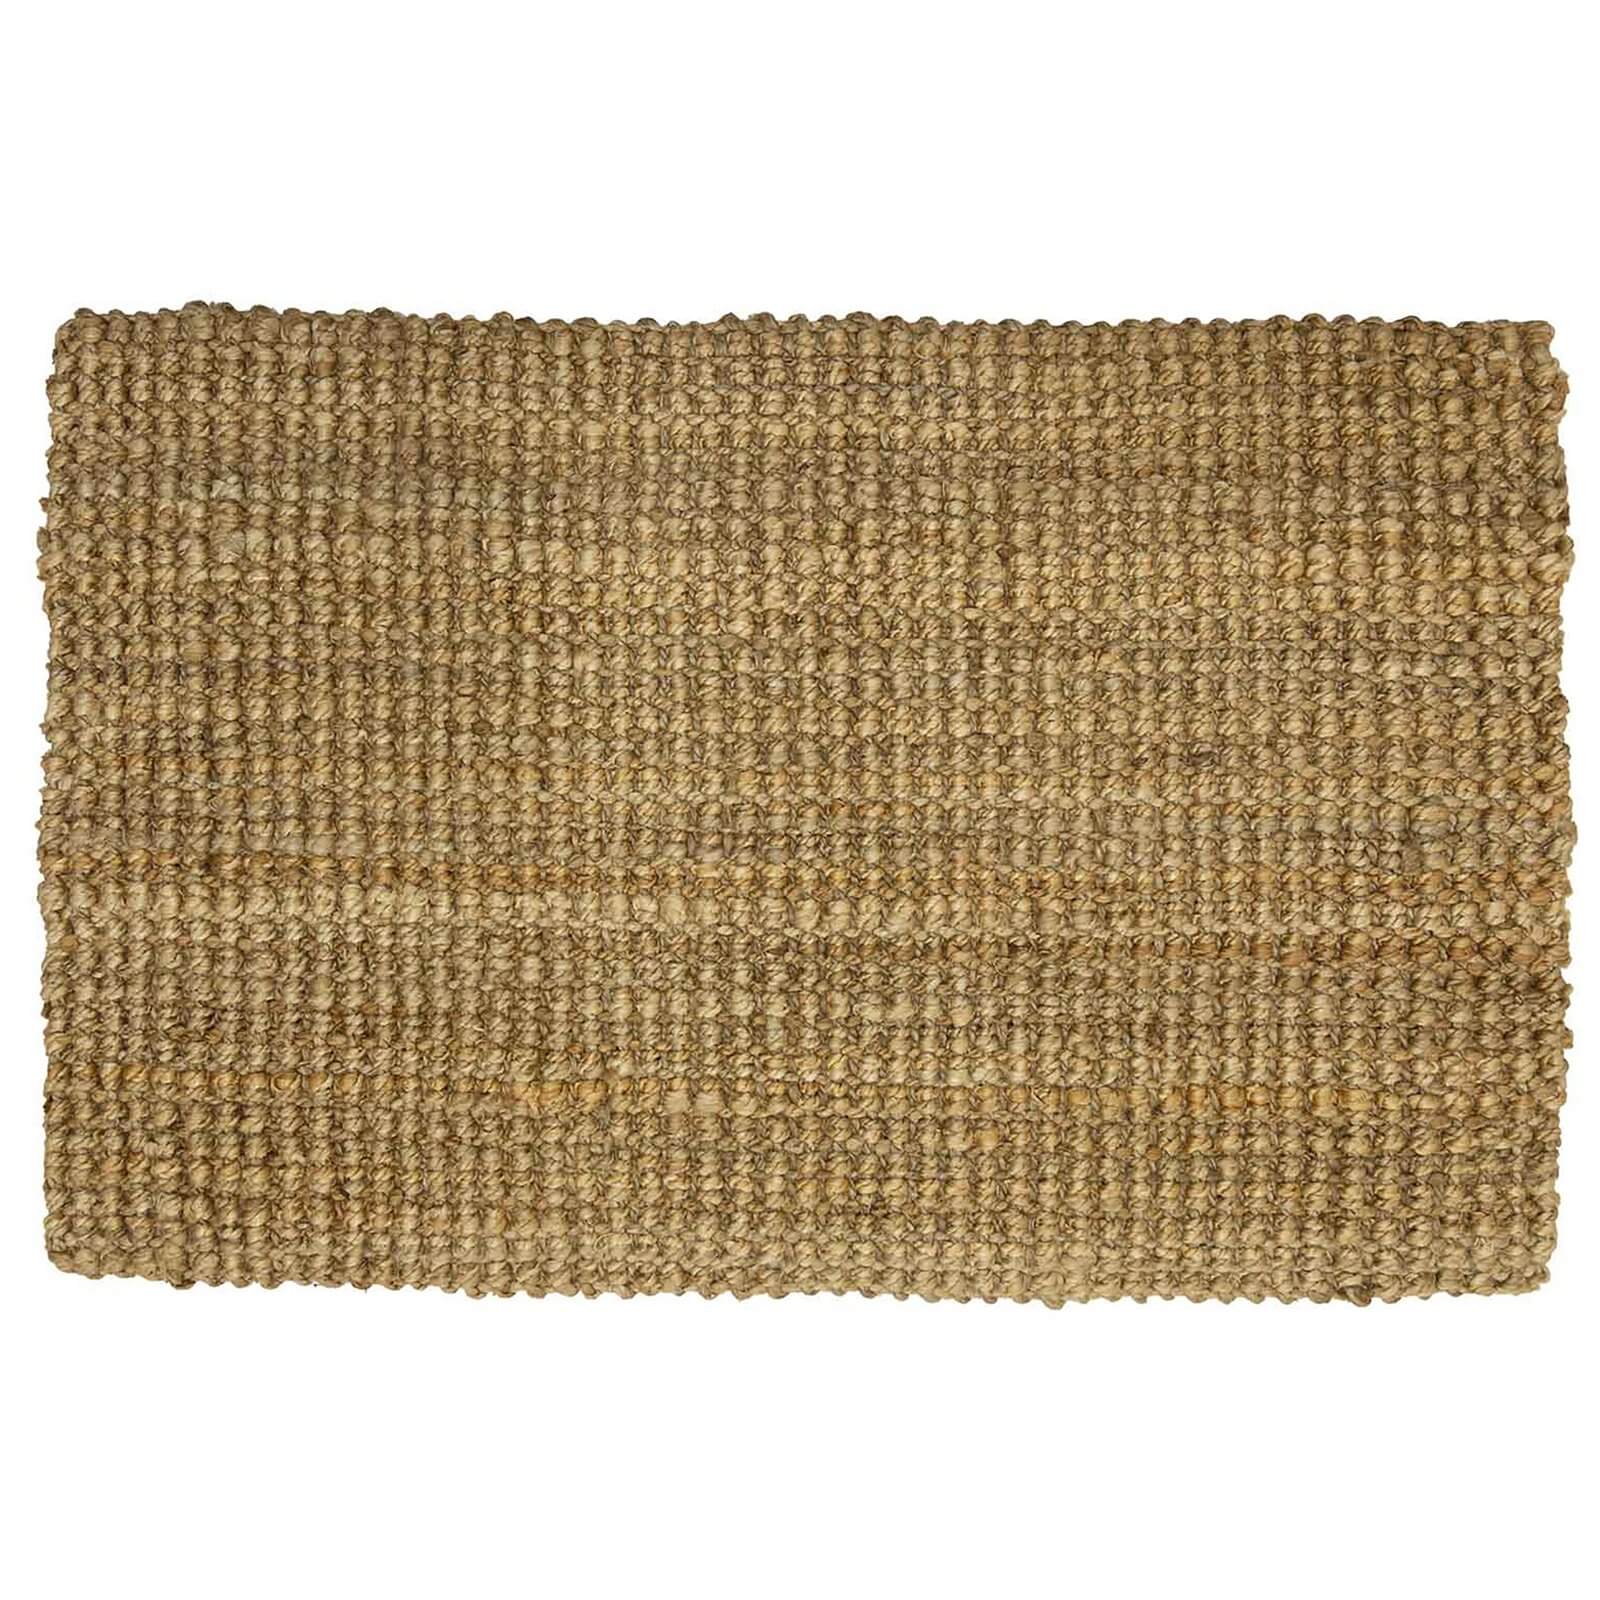 Jute Chunky Weave Rug - Natural